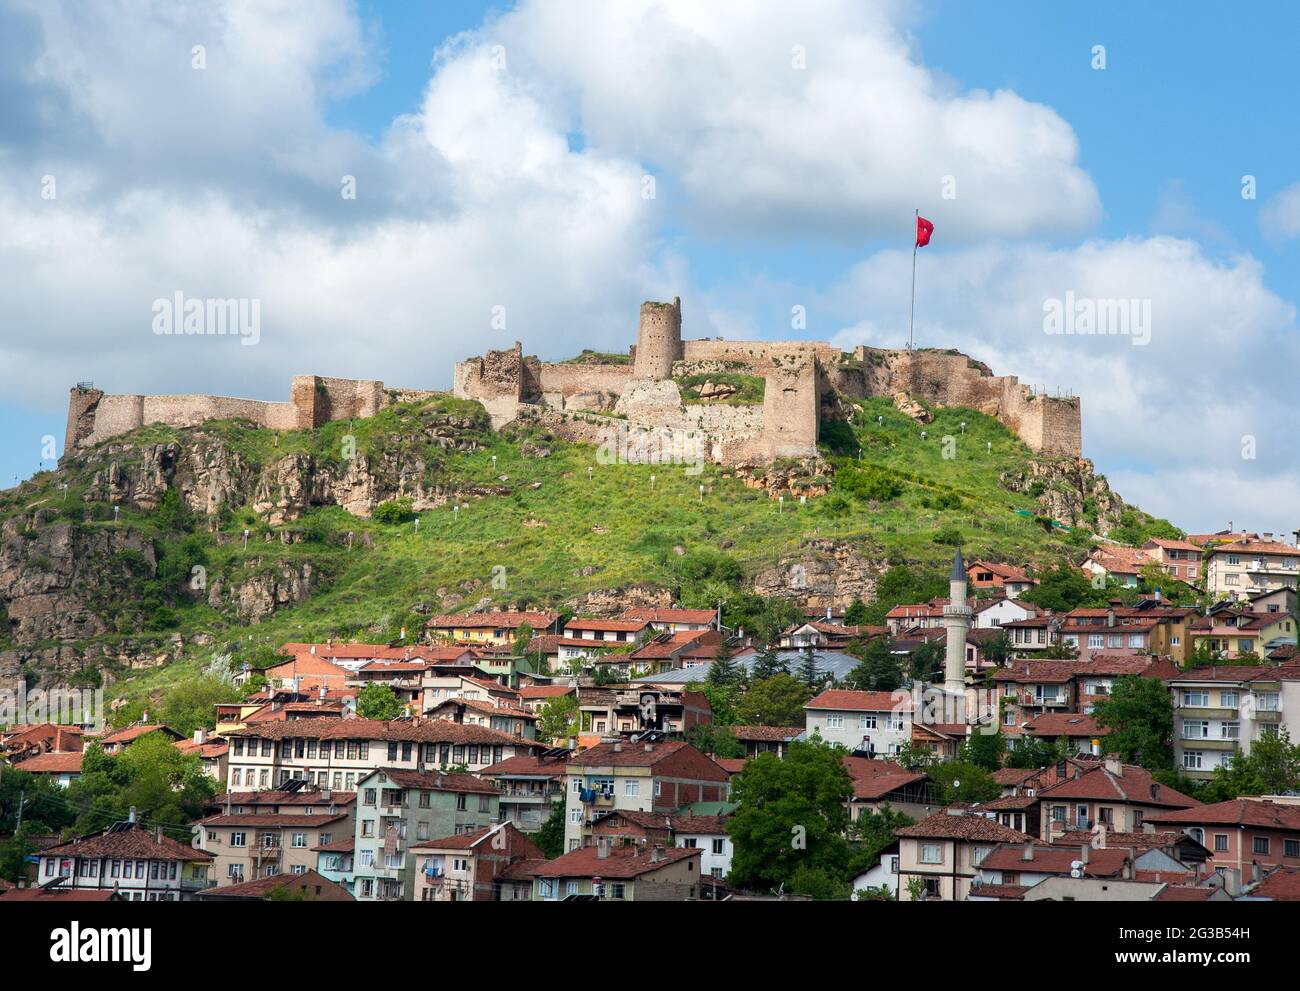 Kastamonu/Turkey - 24/05/2010 - Old historical Kastamonu castle and scenic city view Stock Photo